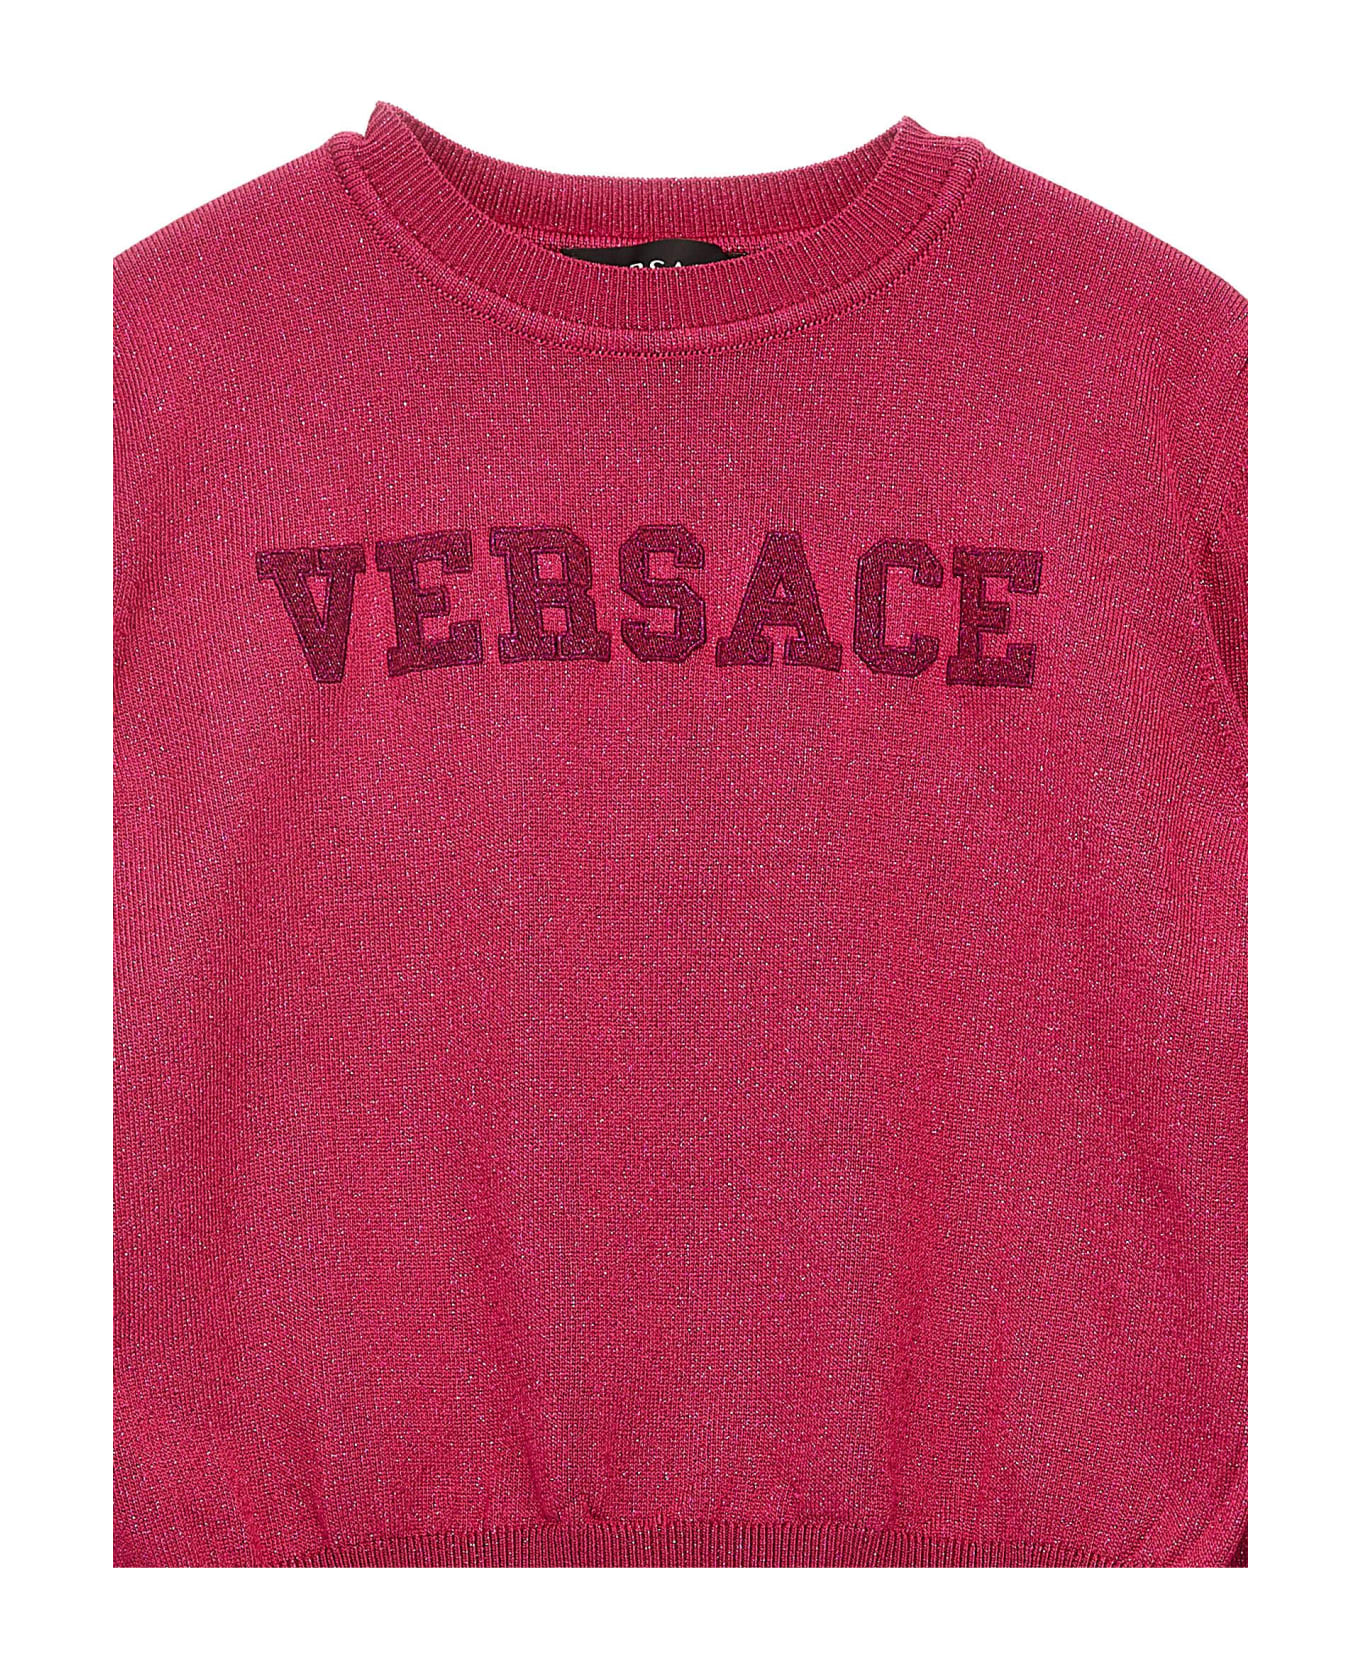 Versace Logo Embroidery Sweater - Fuchsia